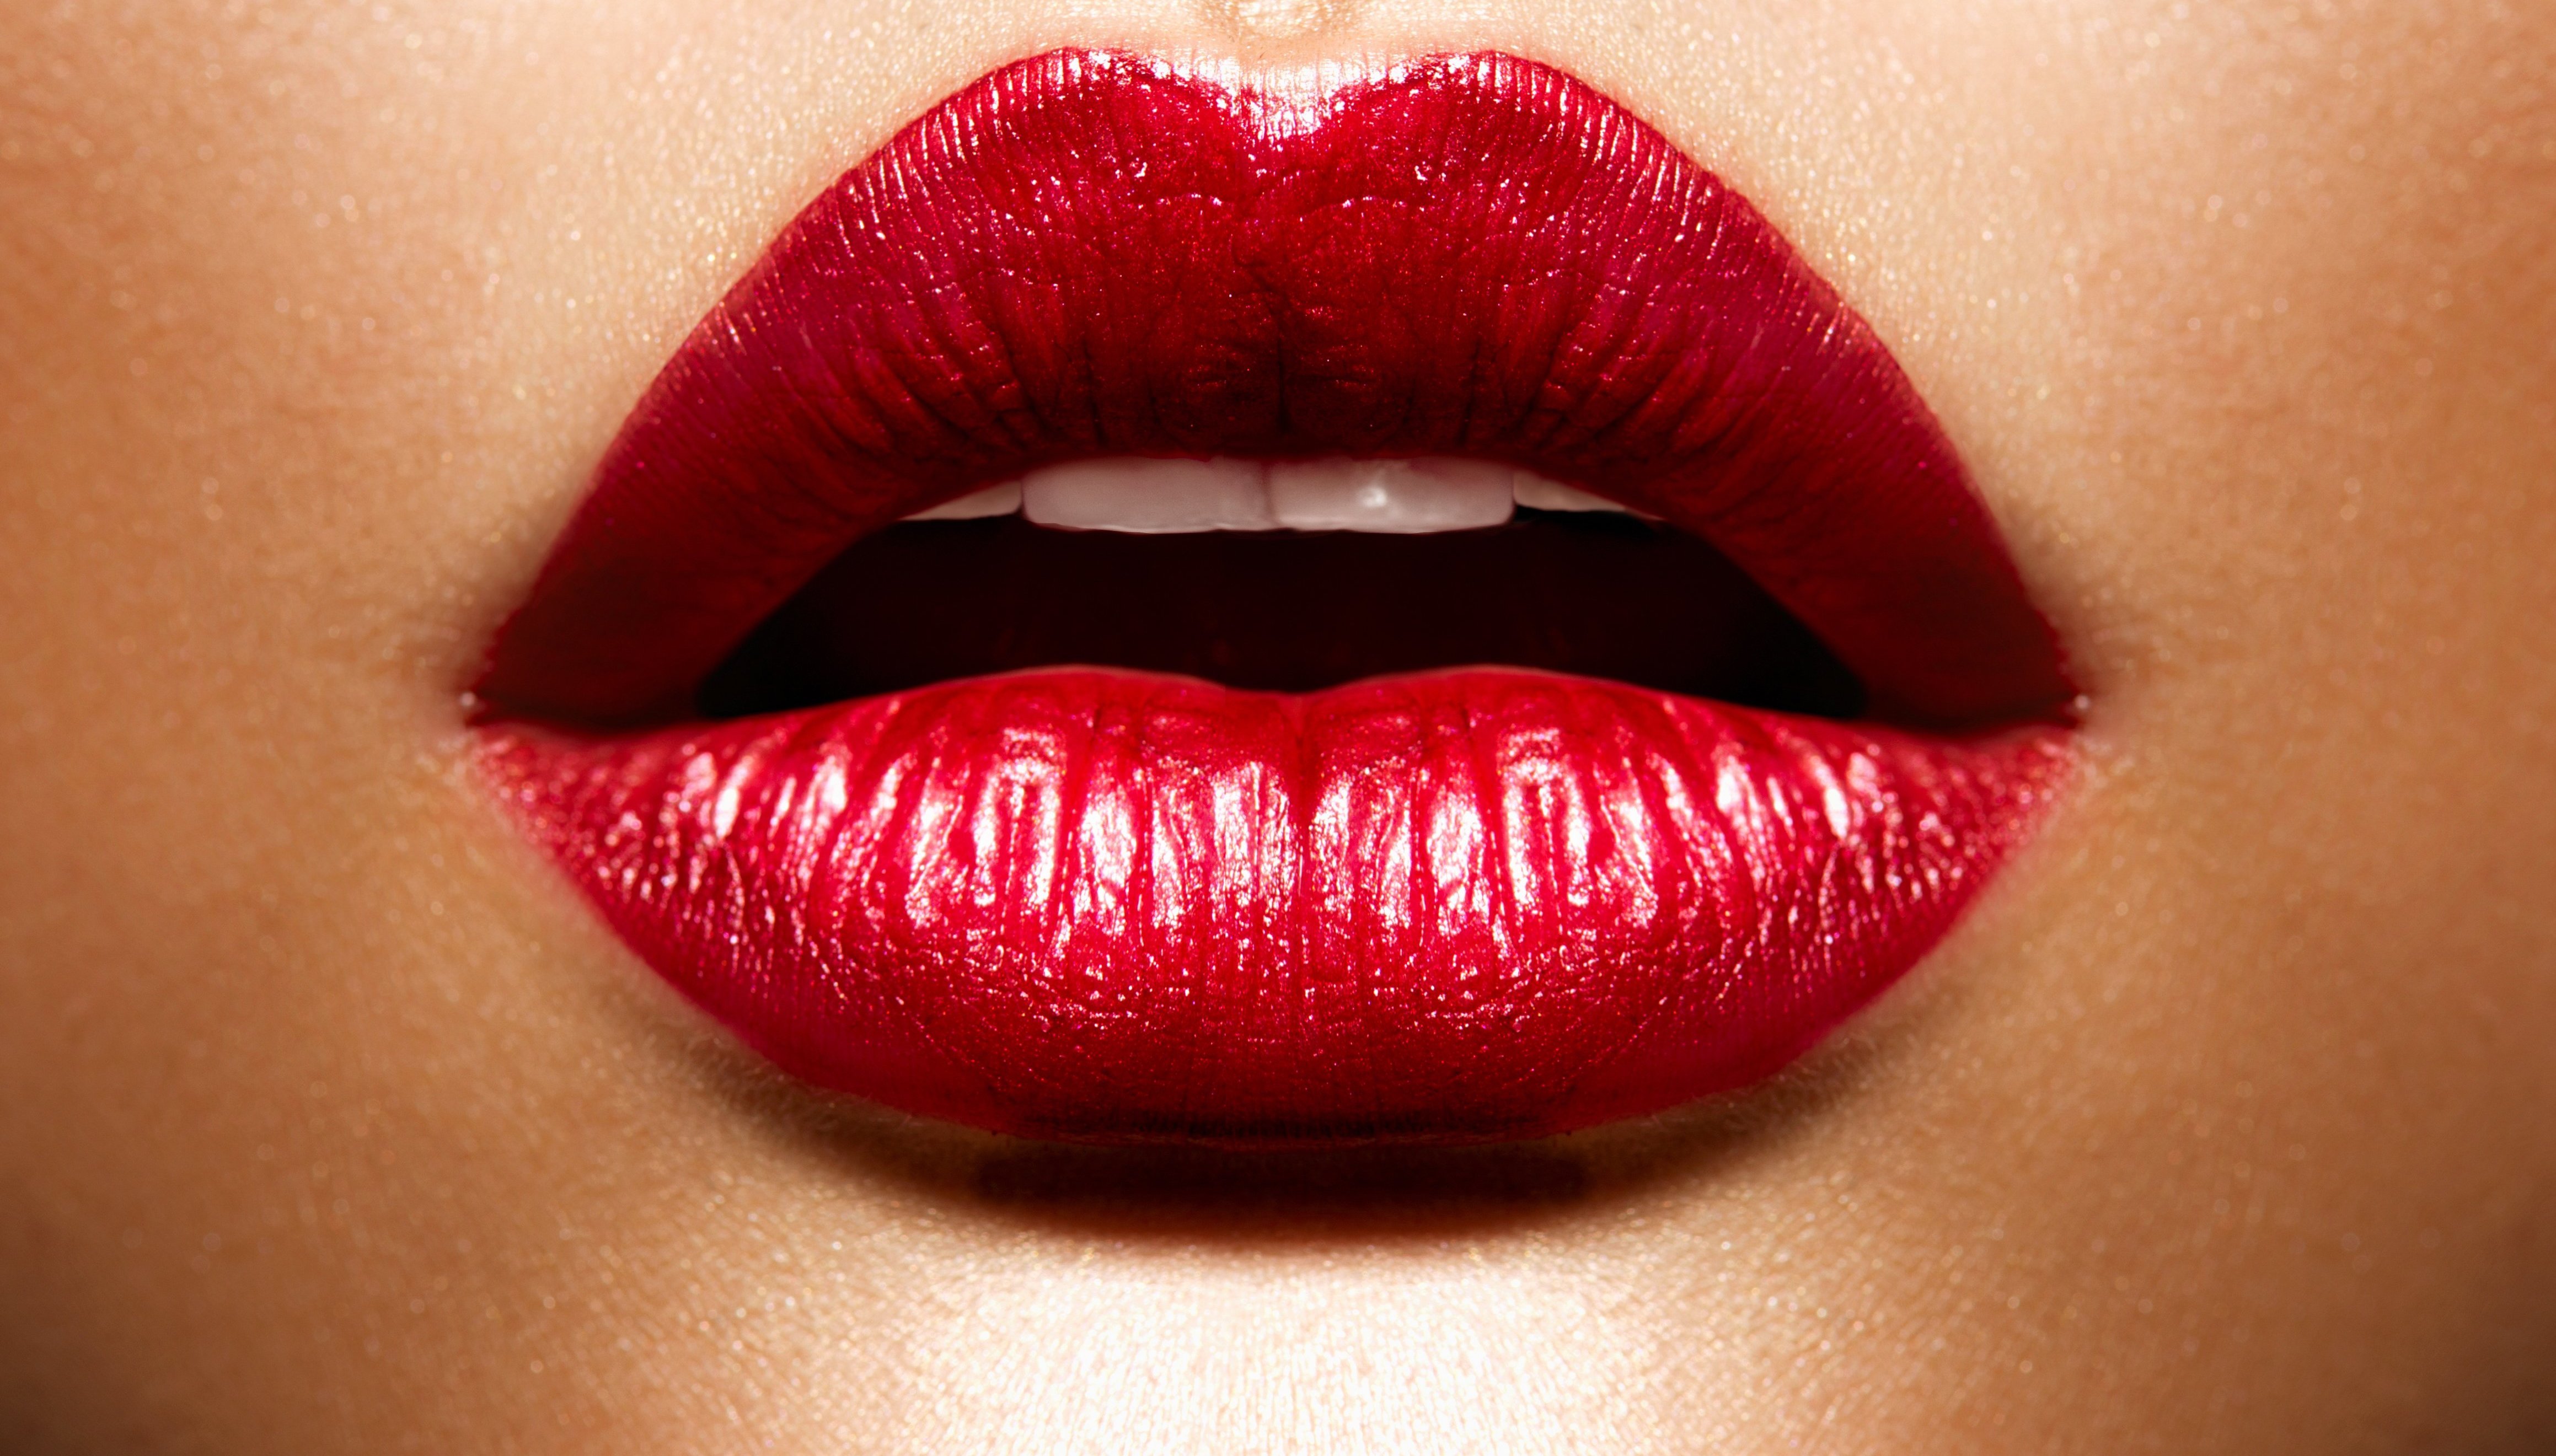 Твои манящие губы. Женские губы. Красивые женские губы. Красивые красные губы. Красивые губки.